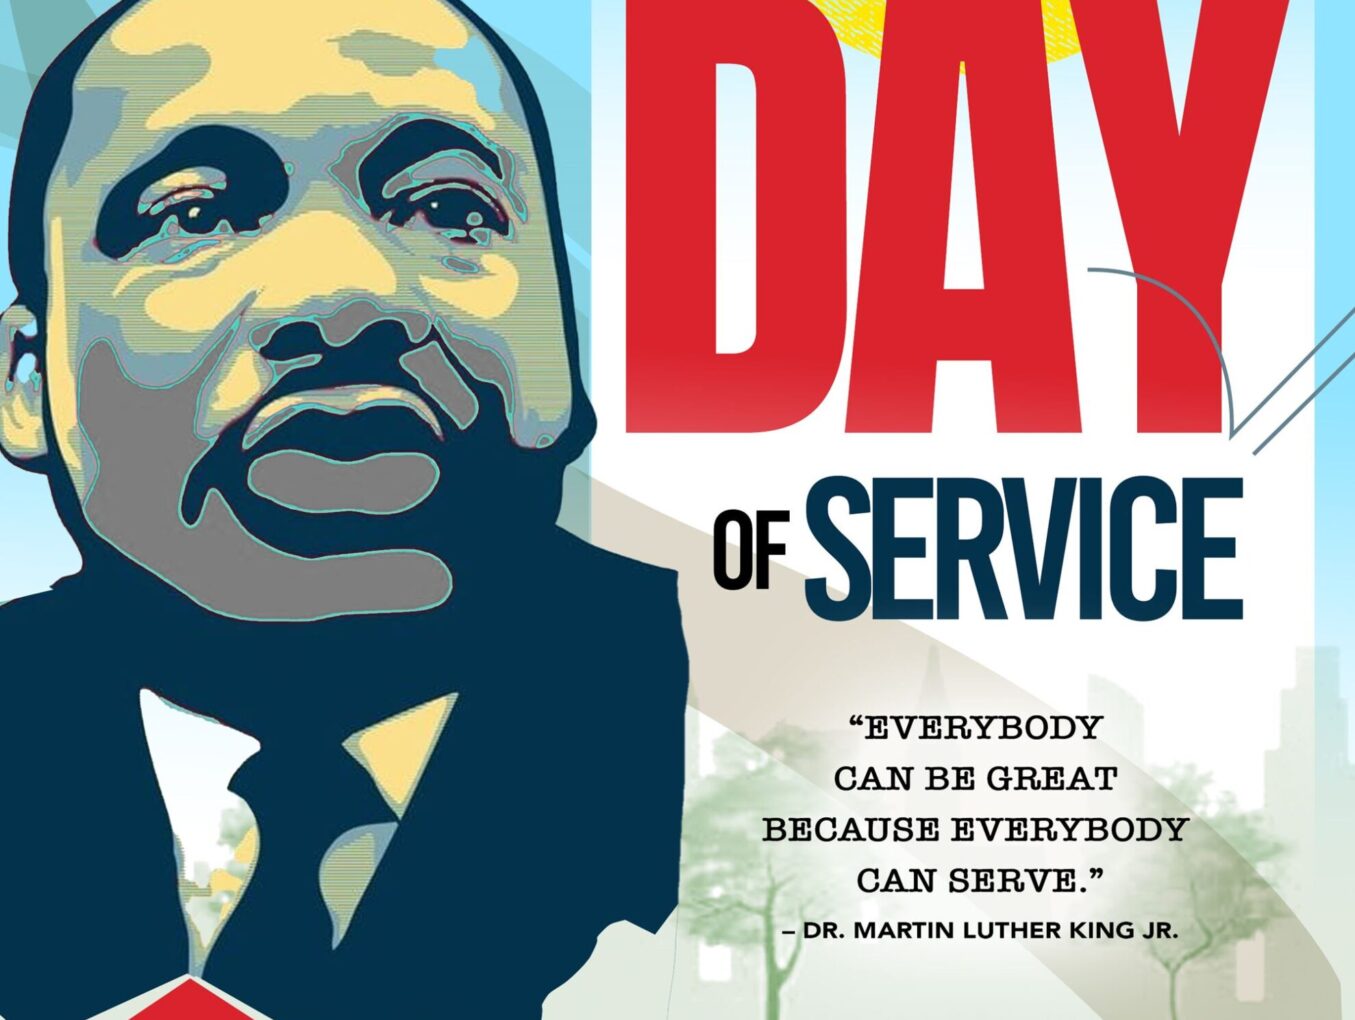 City of Trenton to Host MLK Day of Service